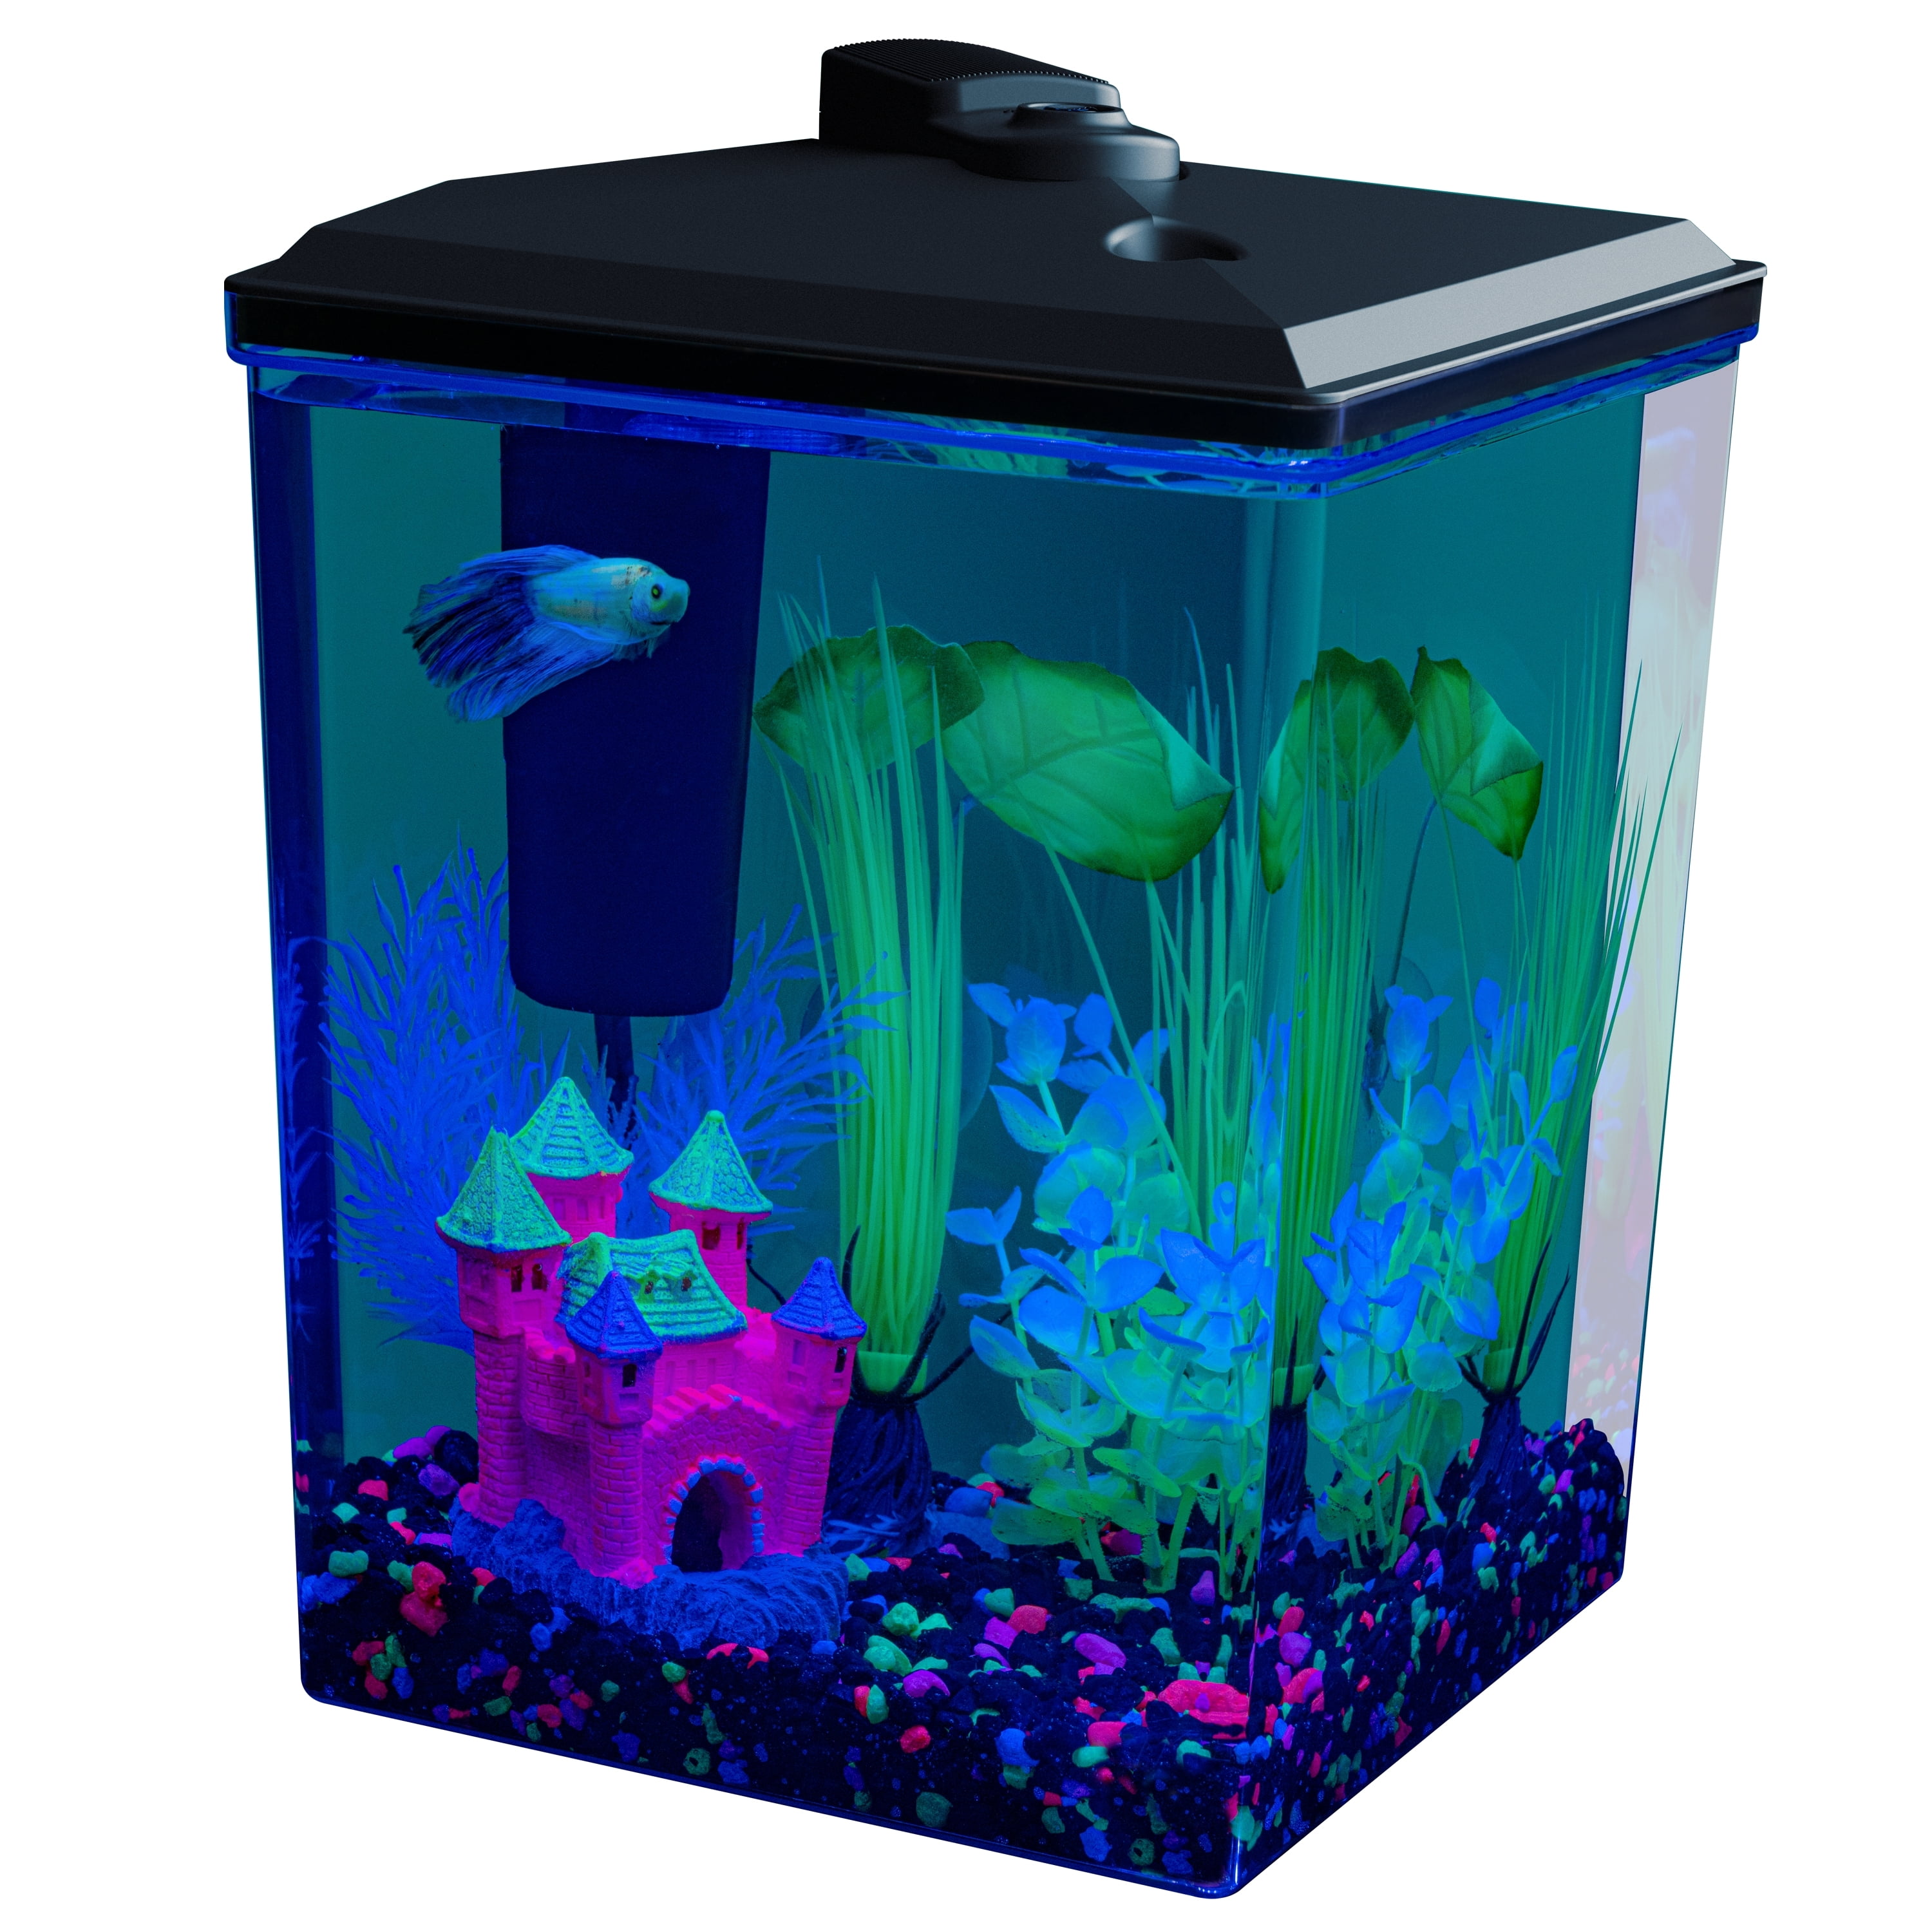 Disney Frozen Themed Betta Fish Tank Multi-Color - 0.7 gal